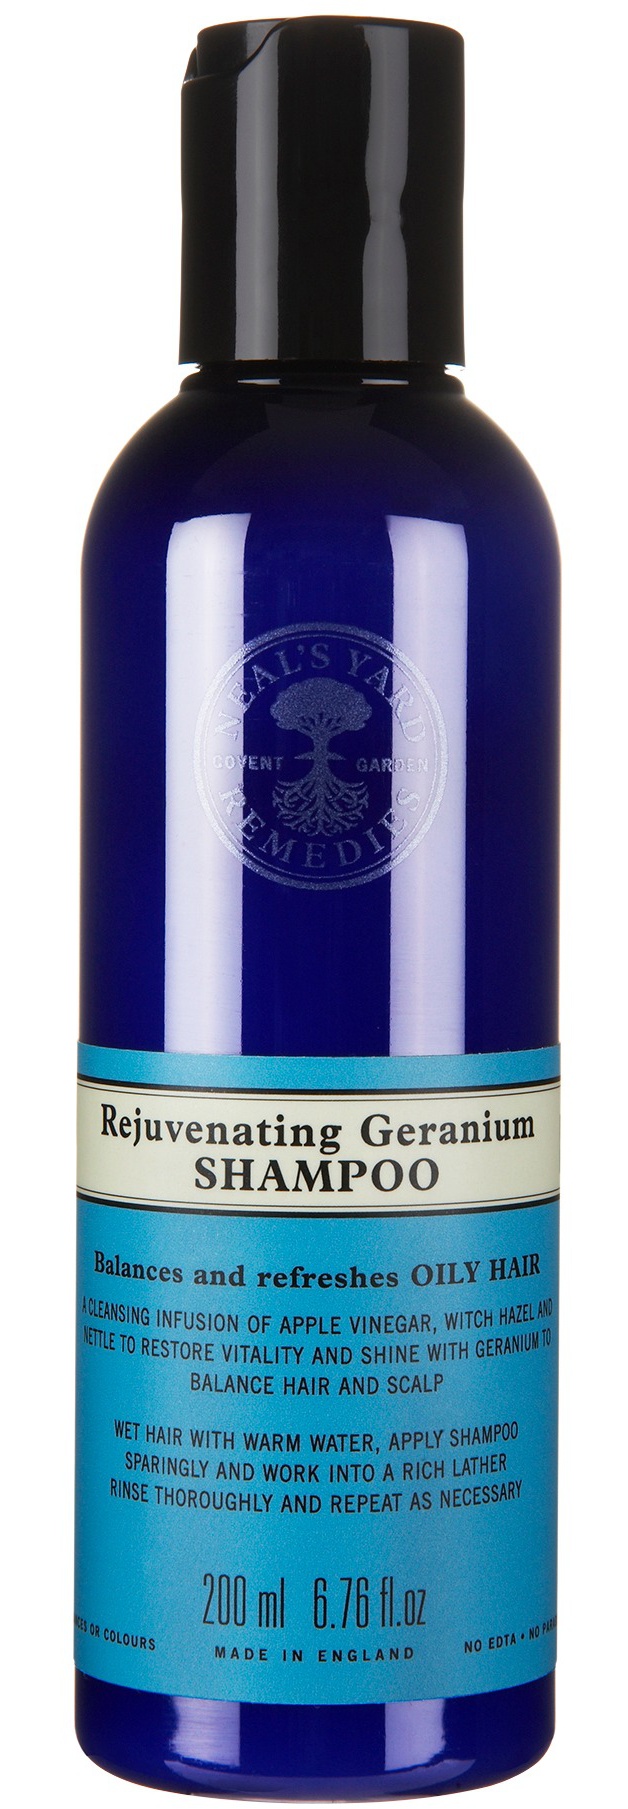 Neal's Yard Remedies Rejuvenating Geranium Shampoo